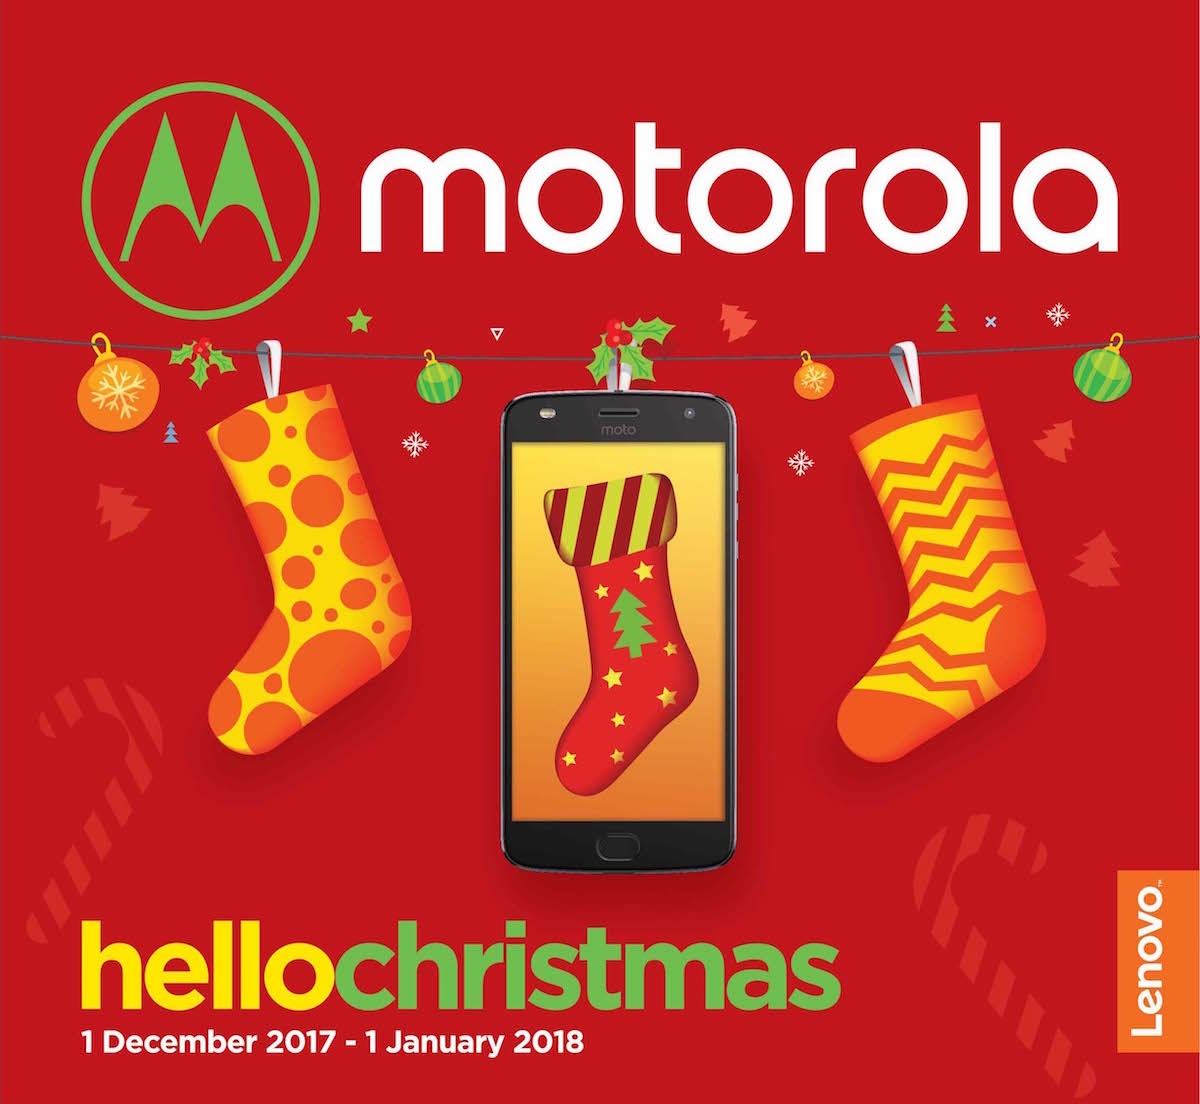 Motorola Christmas Promotion 20181.jpeg